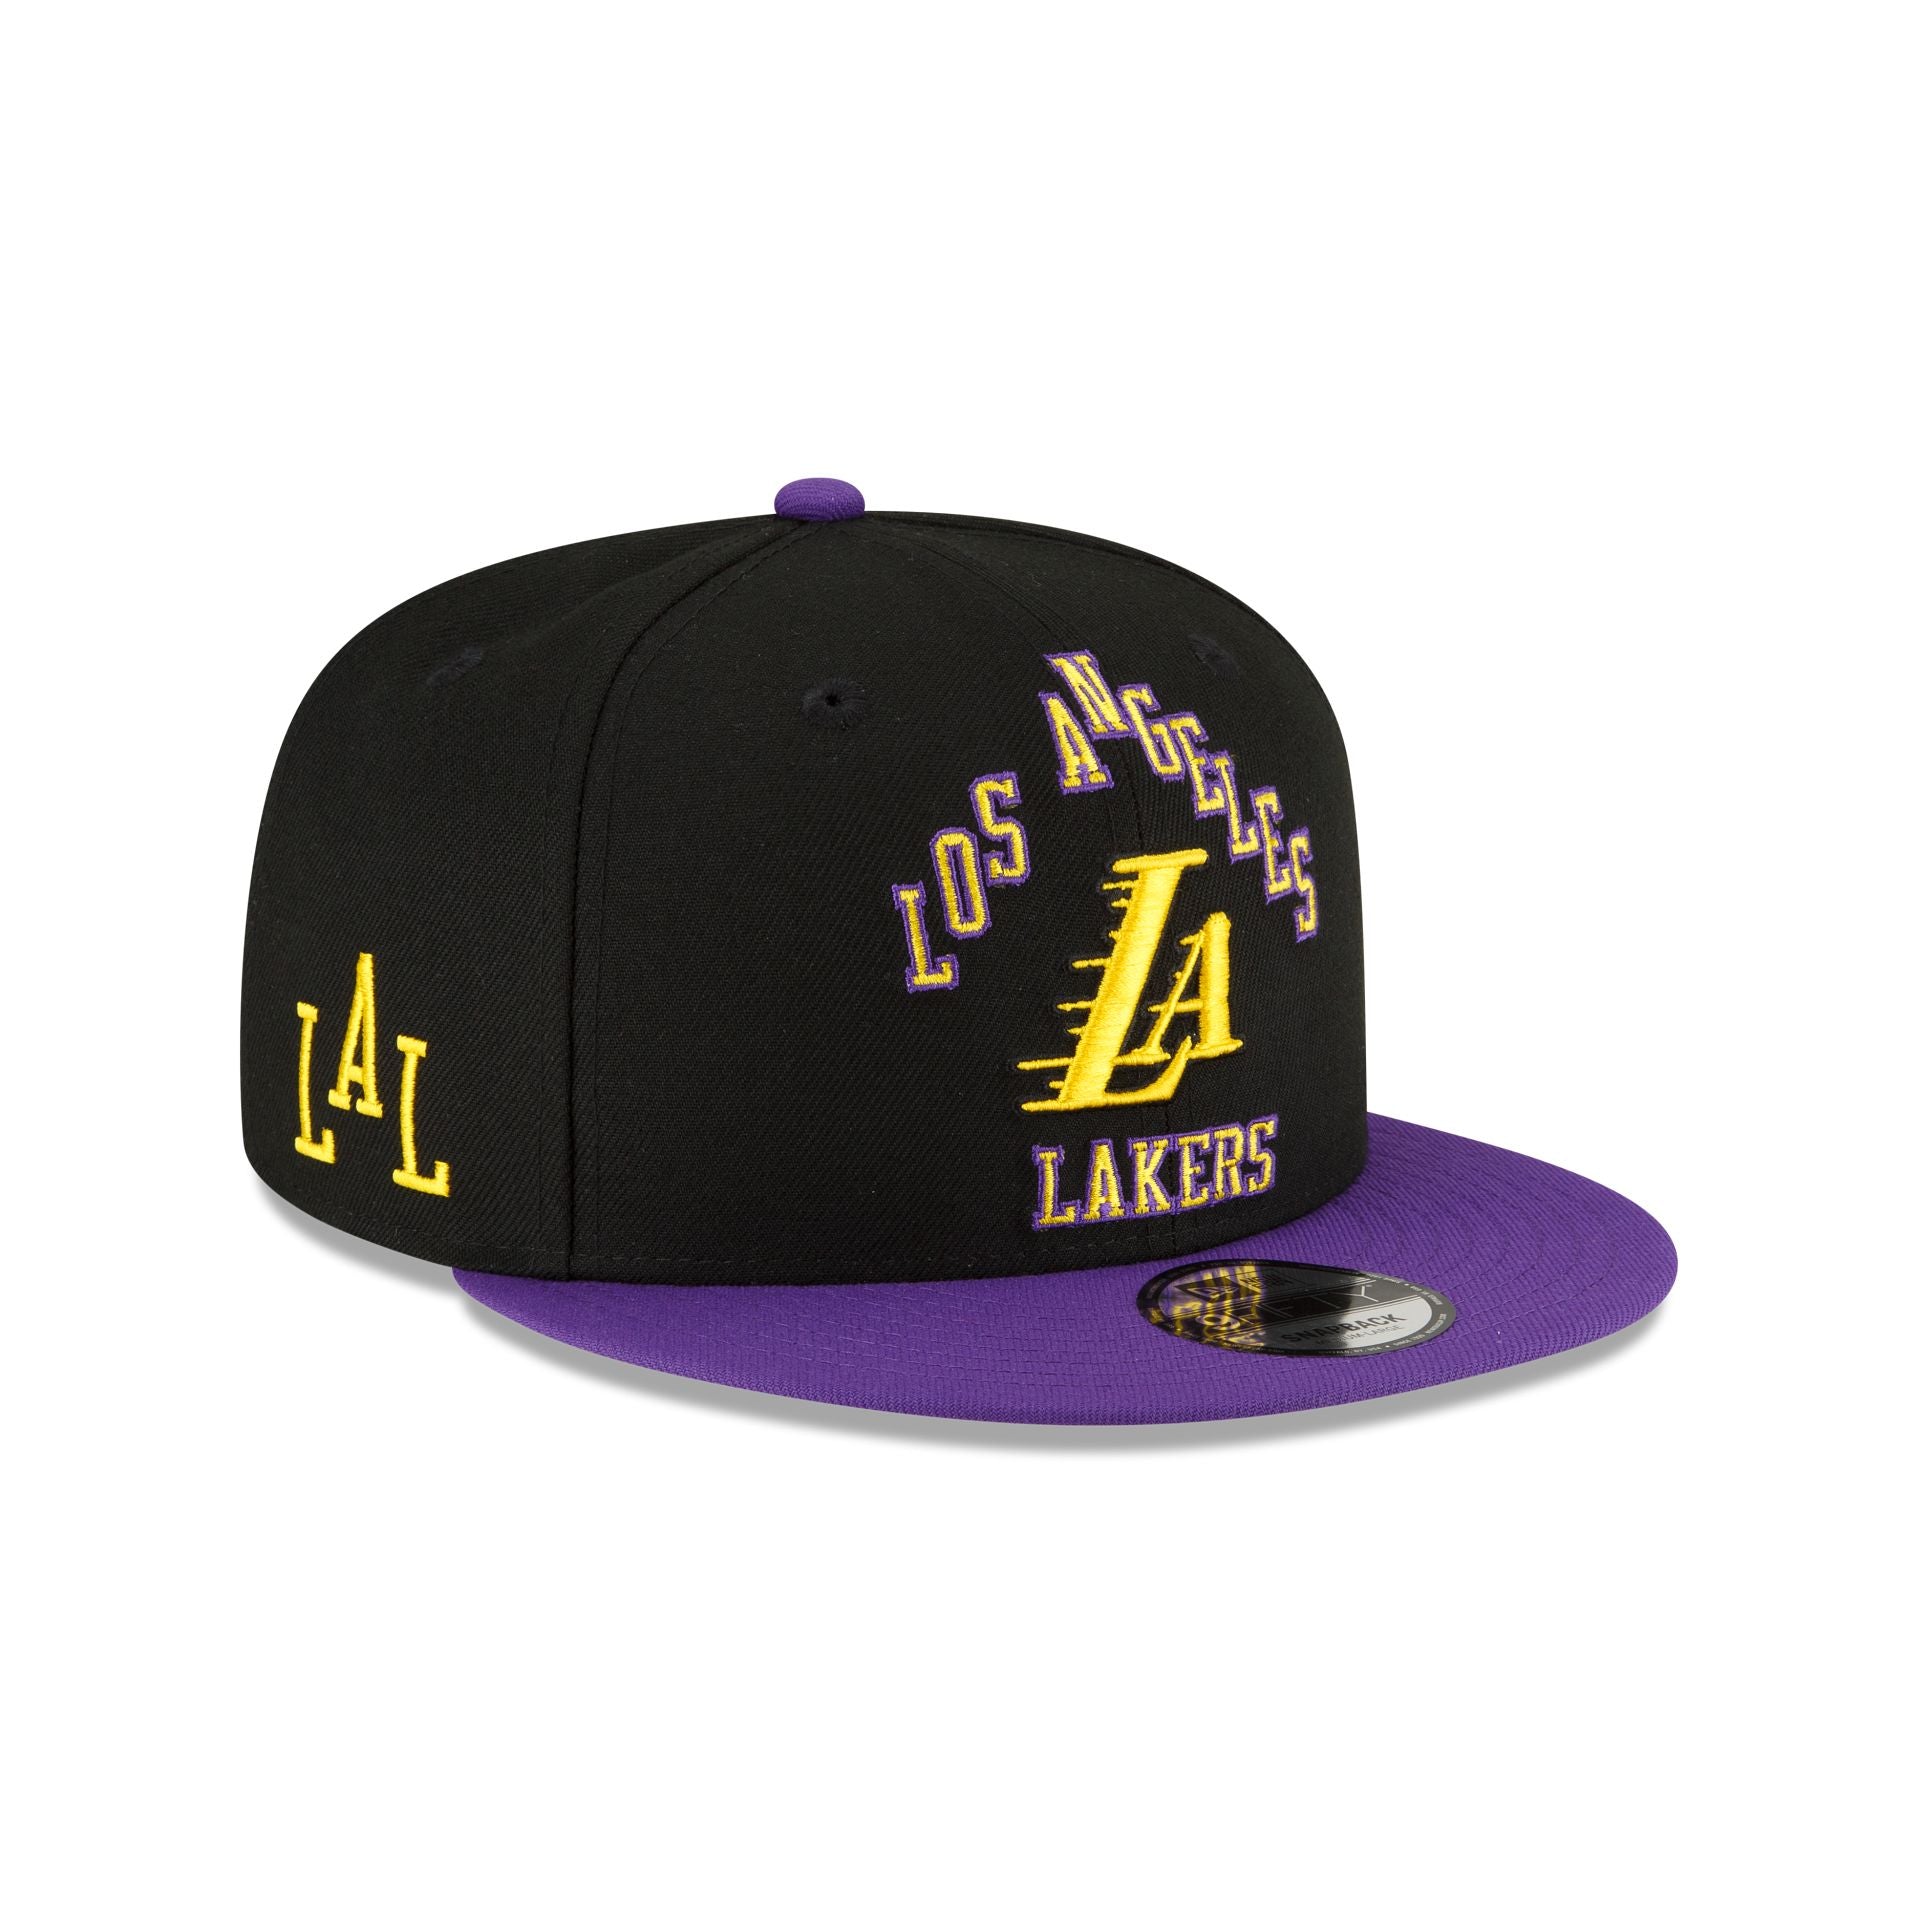 AWAKe NEW ERA 9FIFTY Los Angeles Lakers-